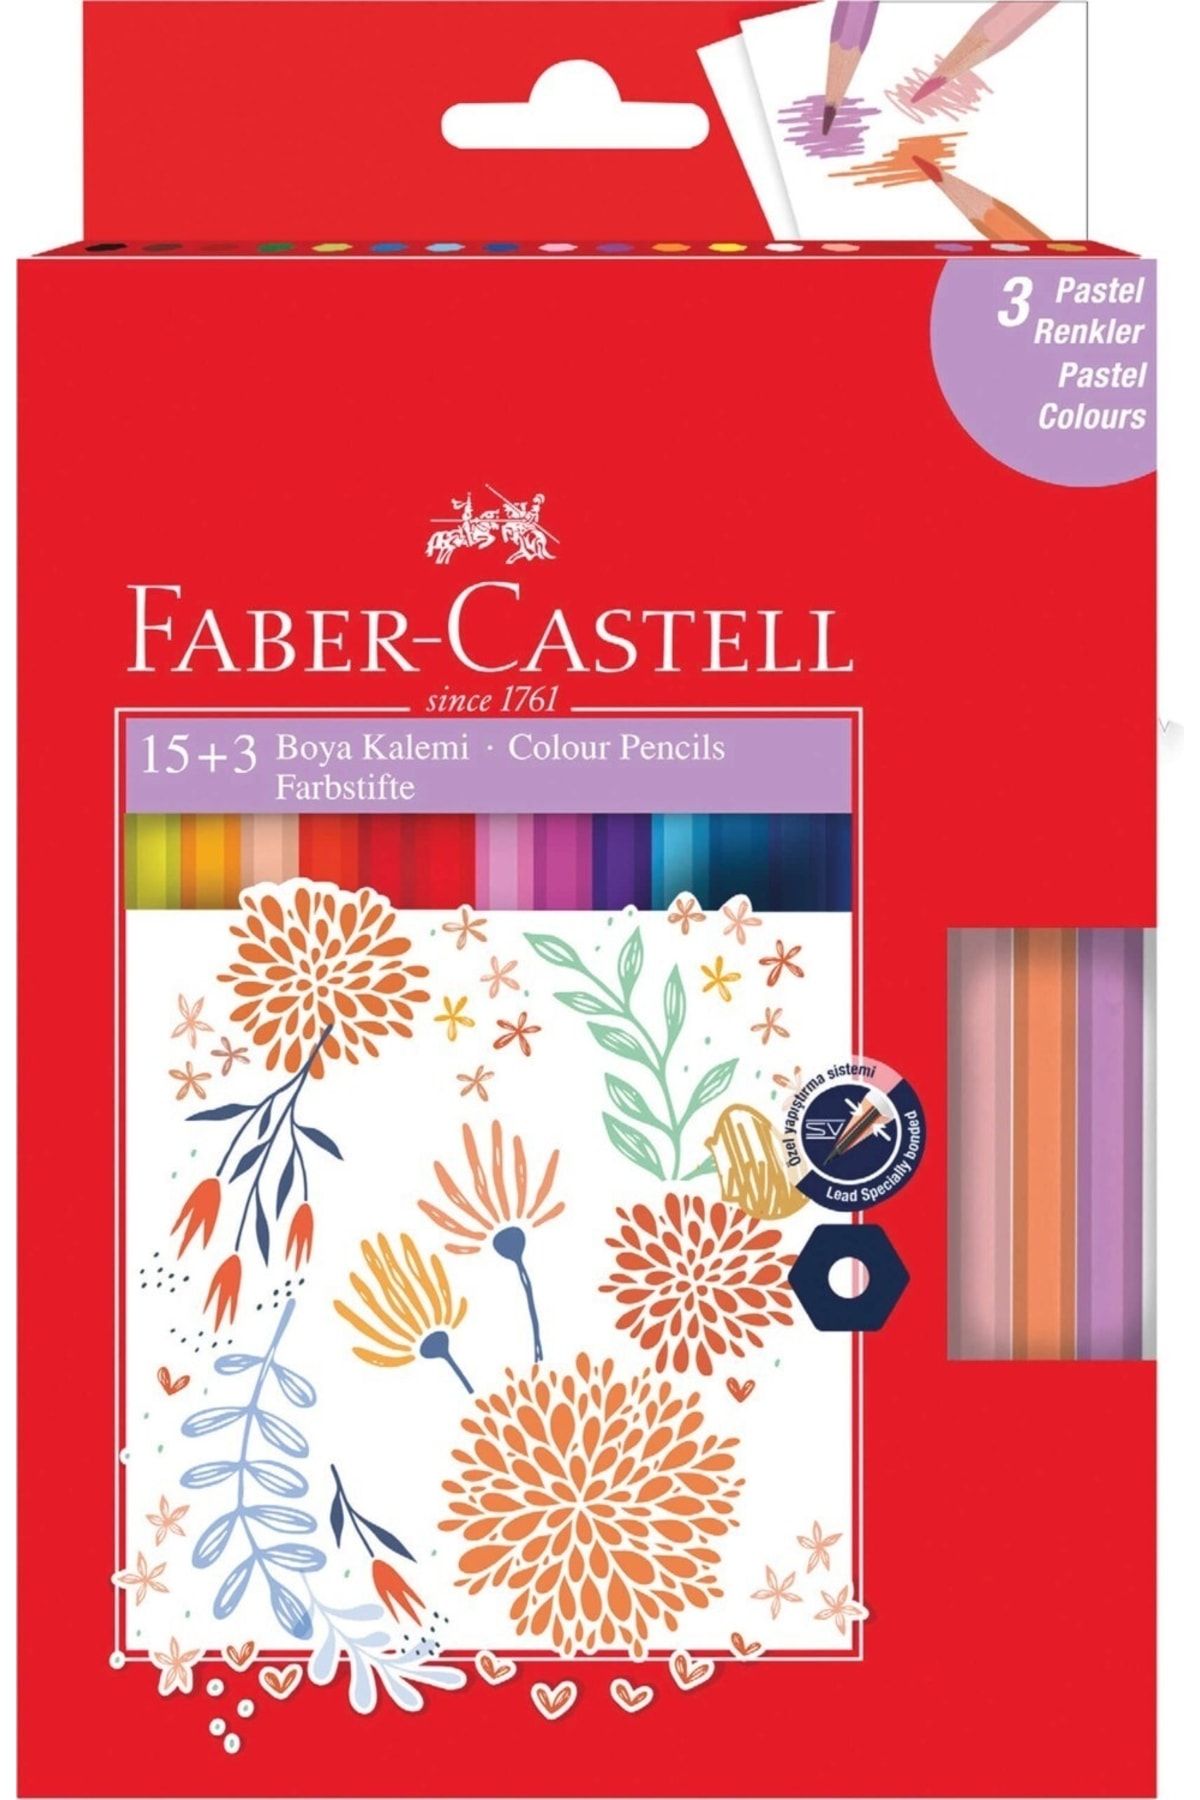 Faber Castell Faber-castell Boya Kalemi 15+3 Pastel Renk